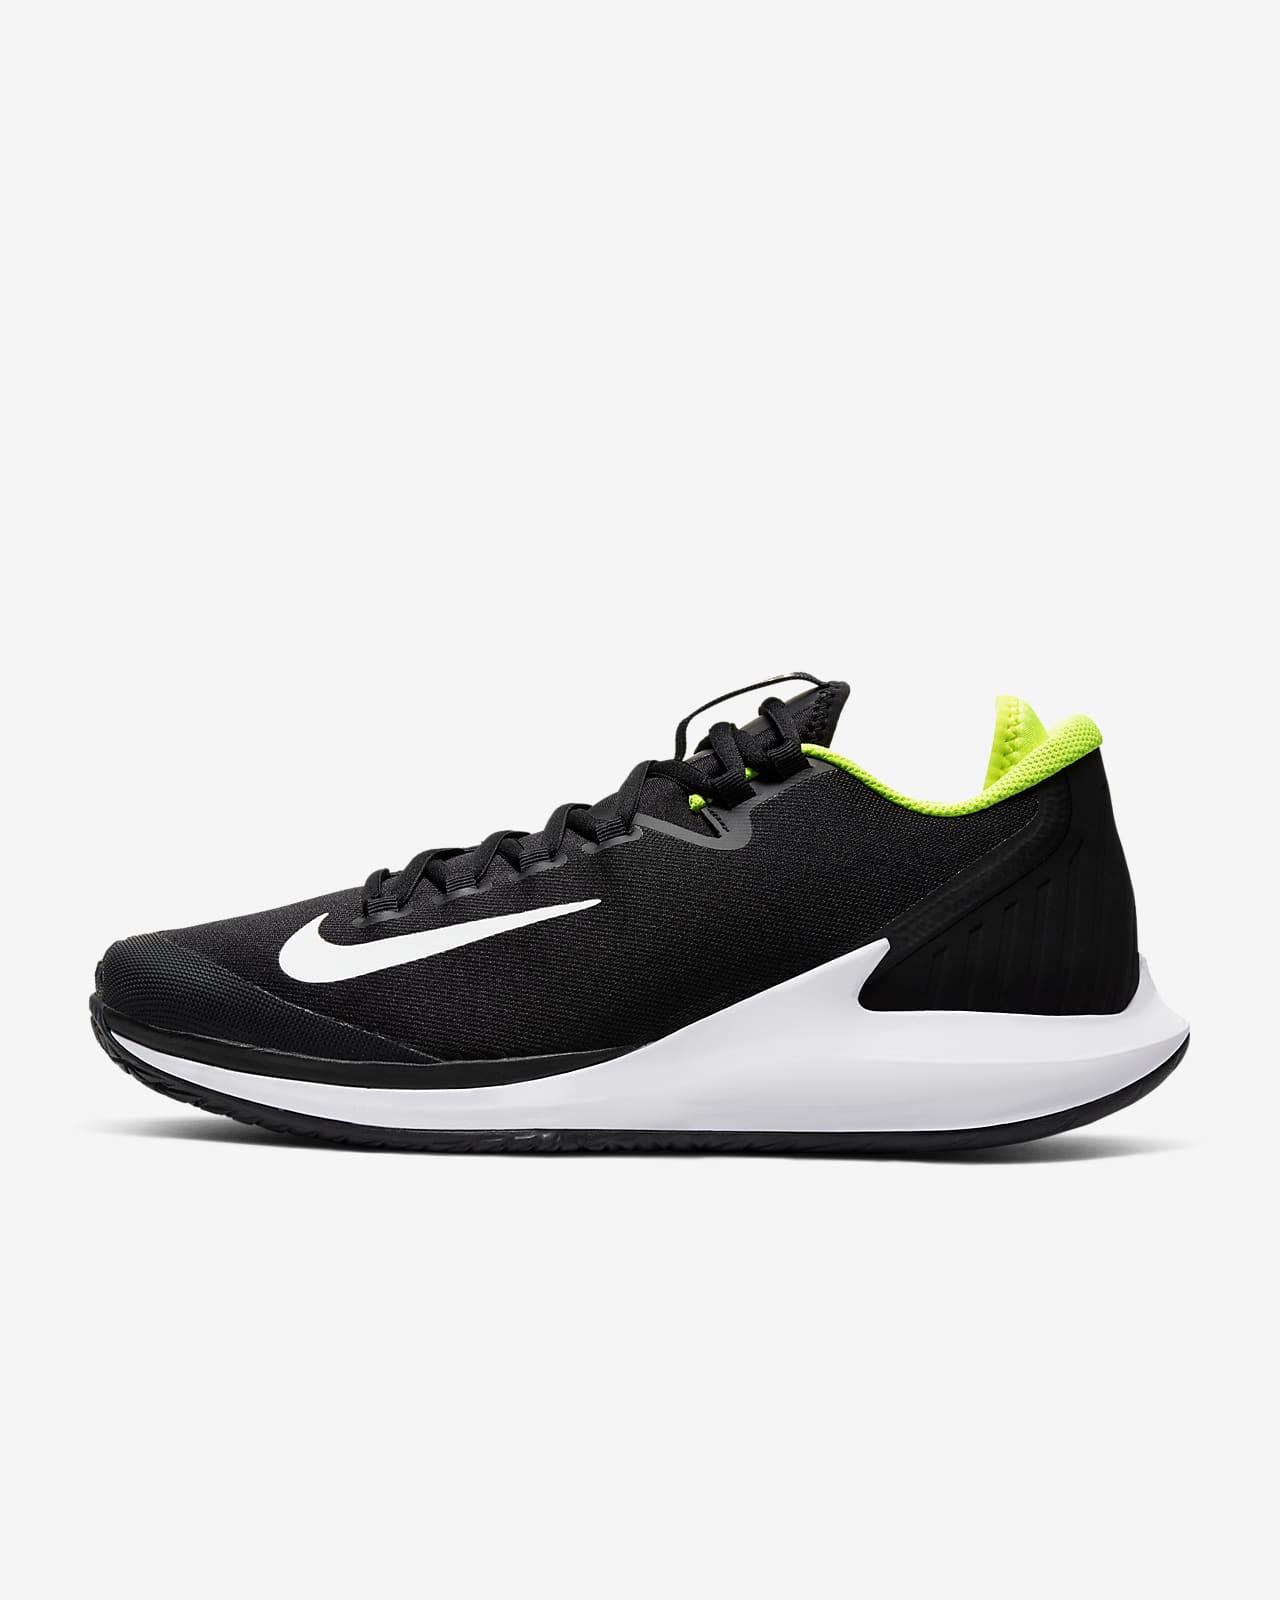 NikeCourt Air Zoom Zero Men's Tennis Shoe. Nike LU